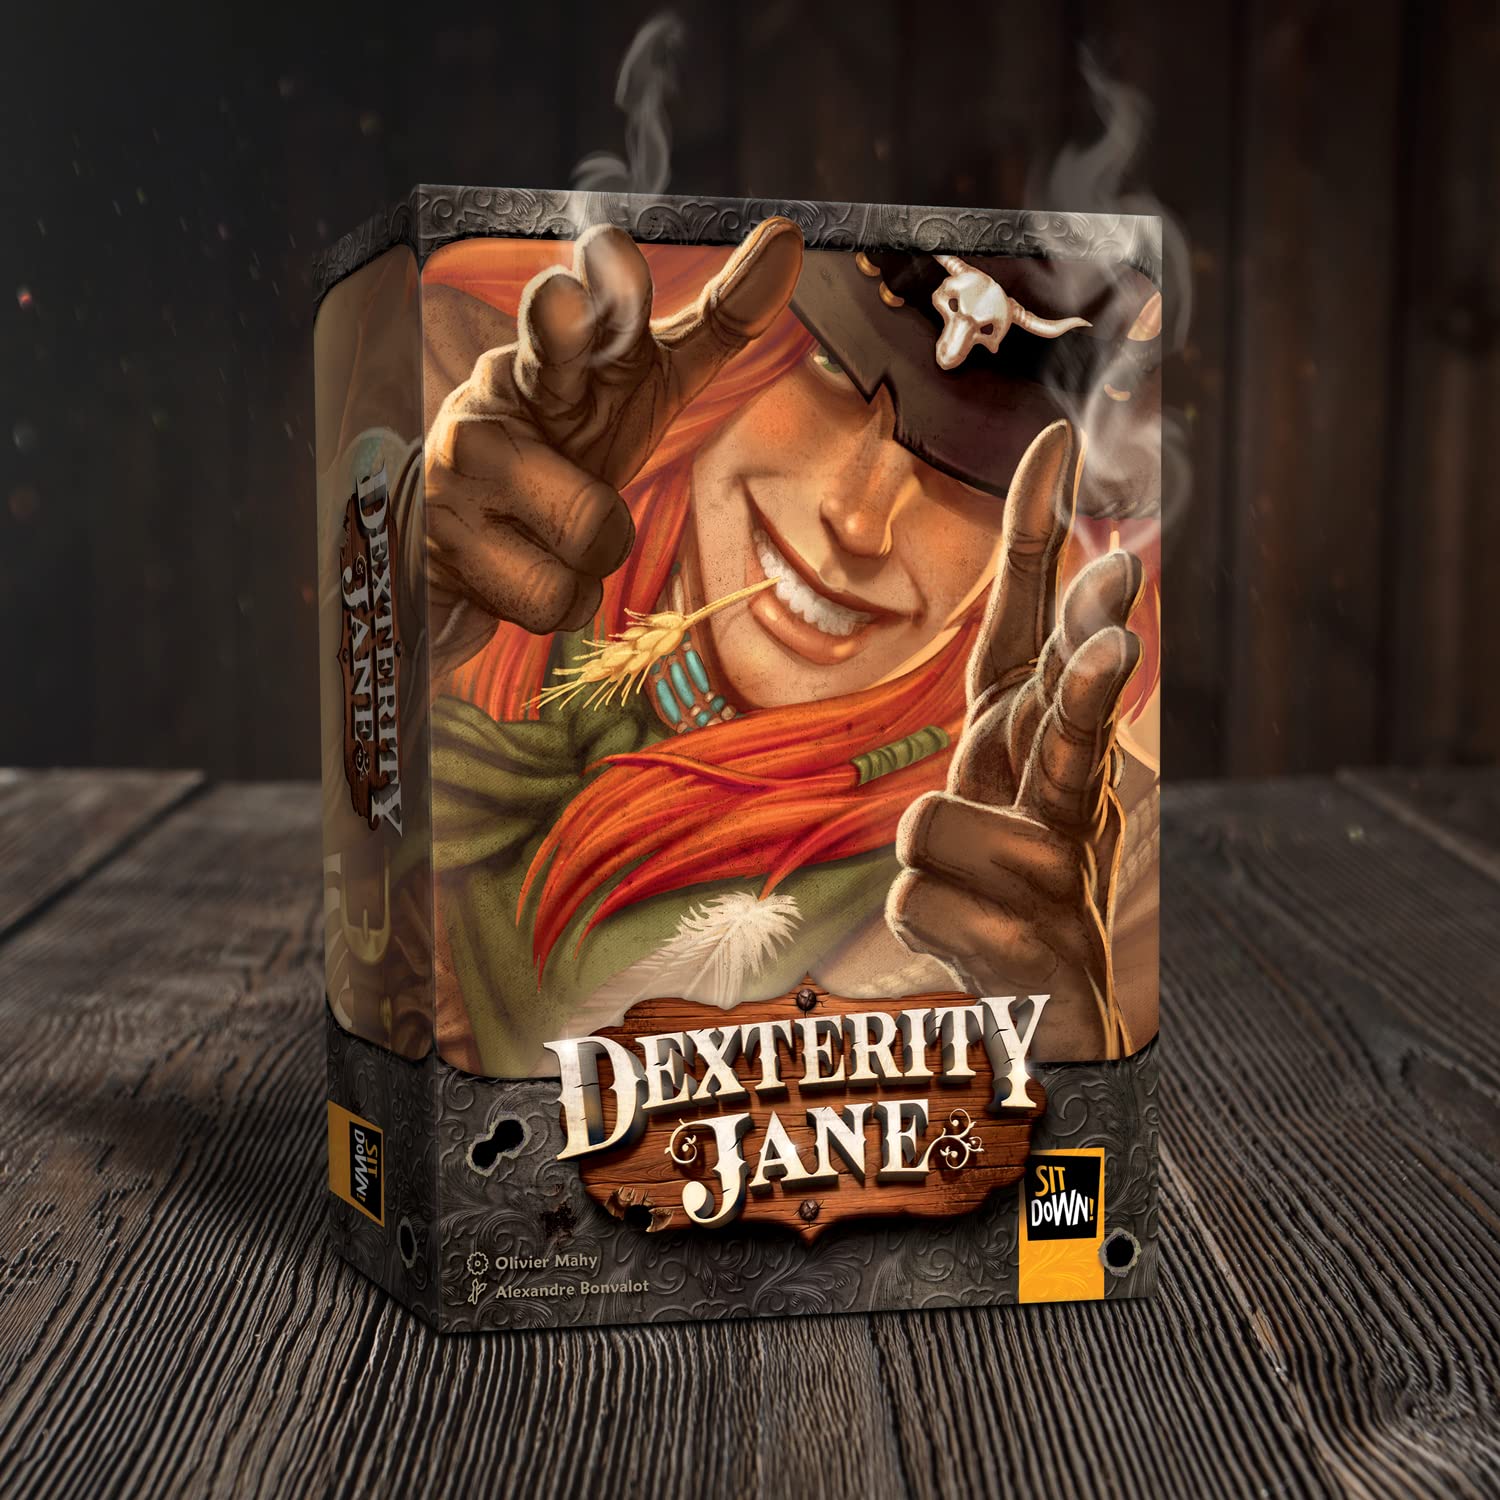 Dexterity Jane